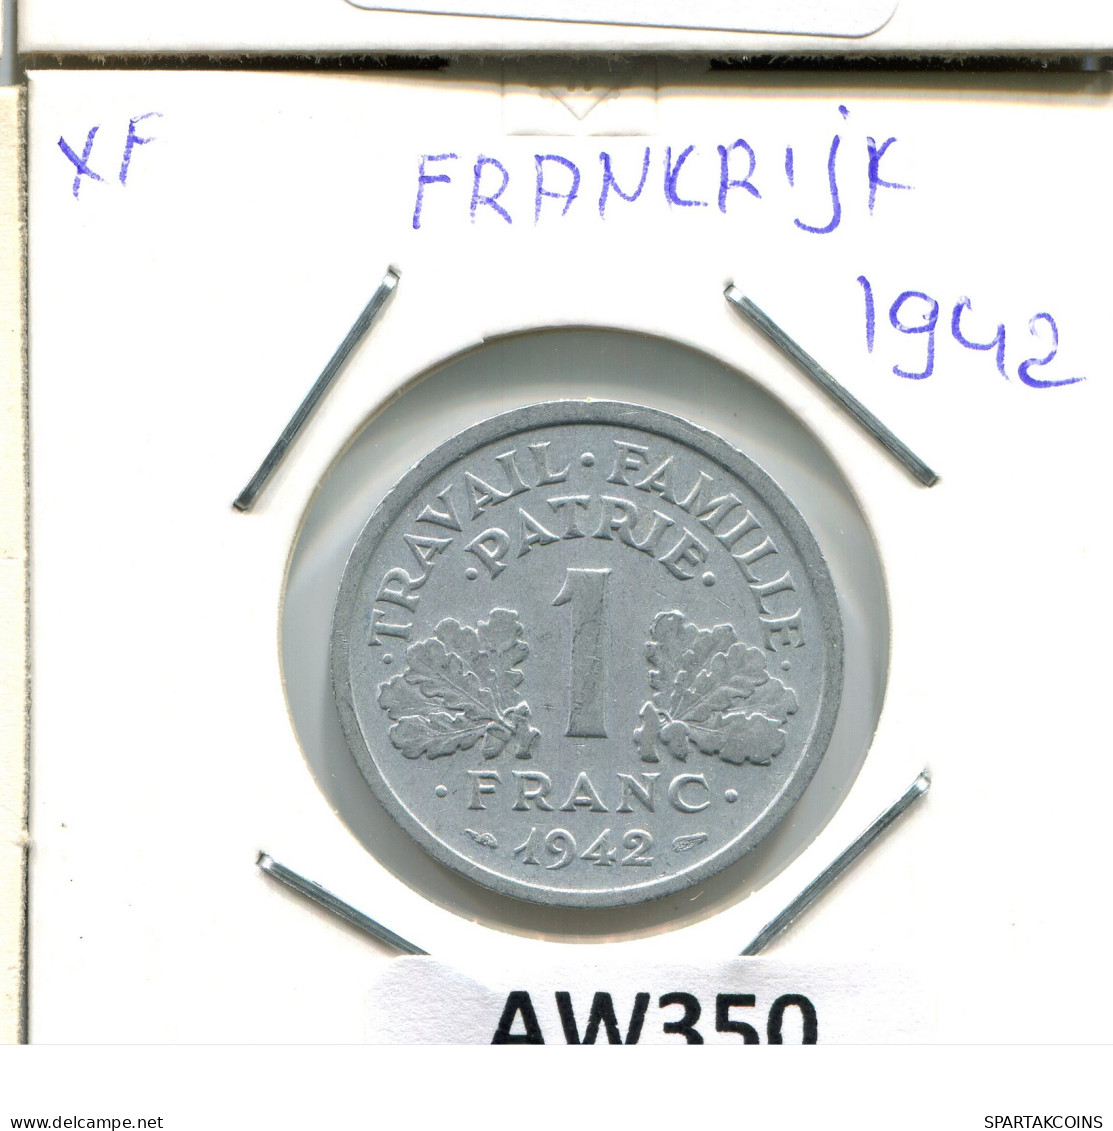 1 FRANC 1942 (Heavy Type) FRANKREICH FRANCE Französisch Münze #AW350.D - 1 Franc